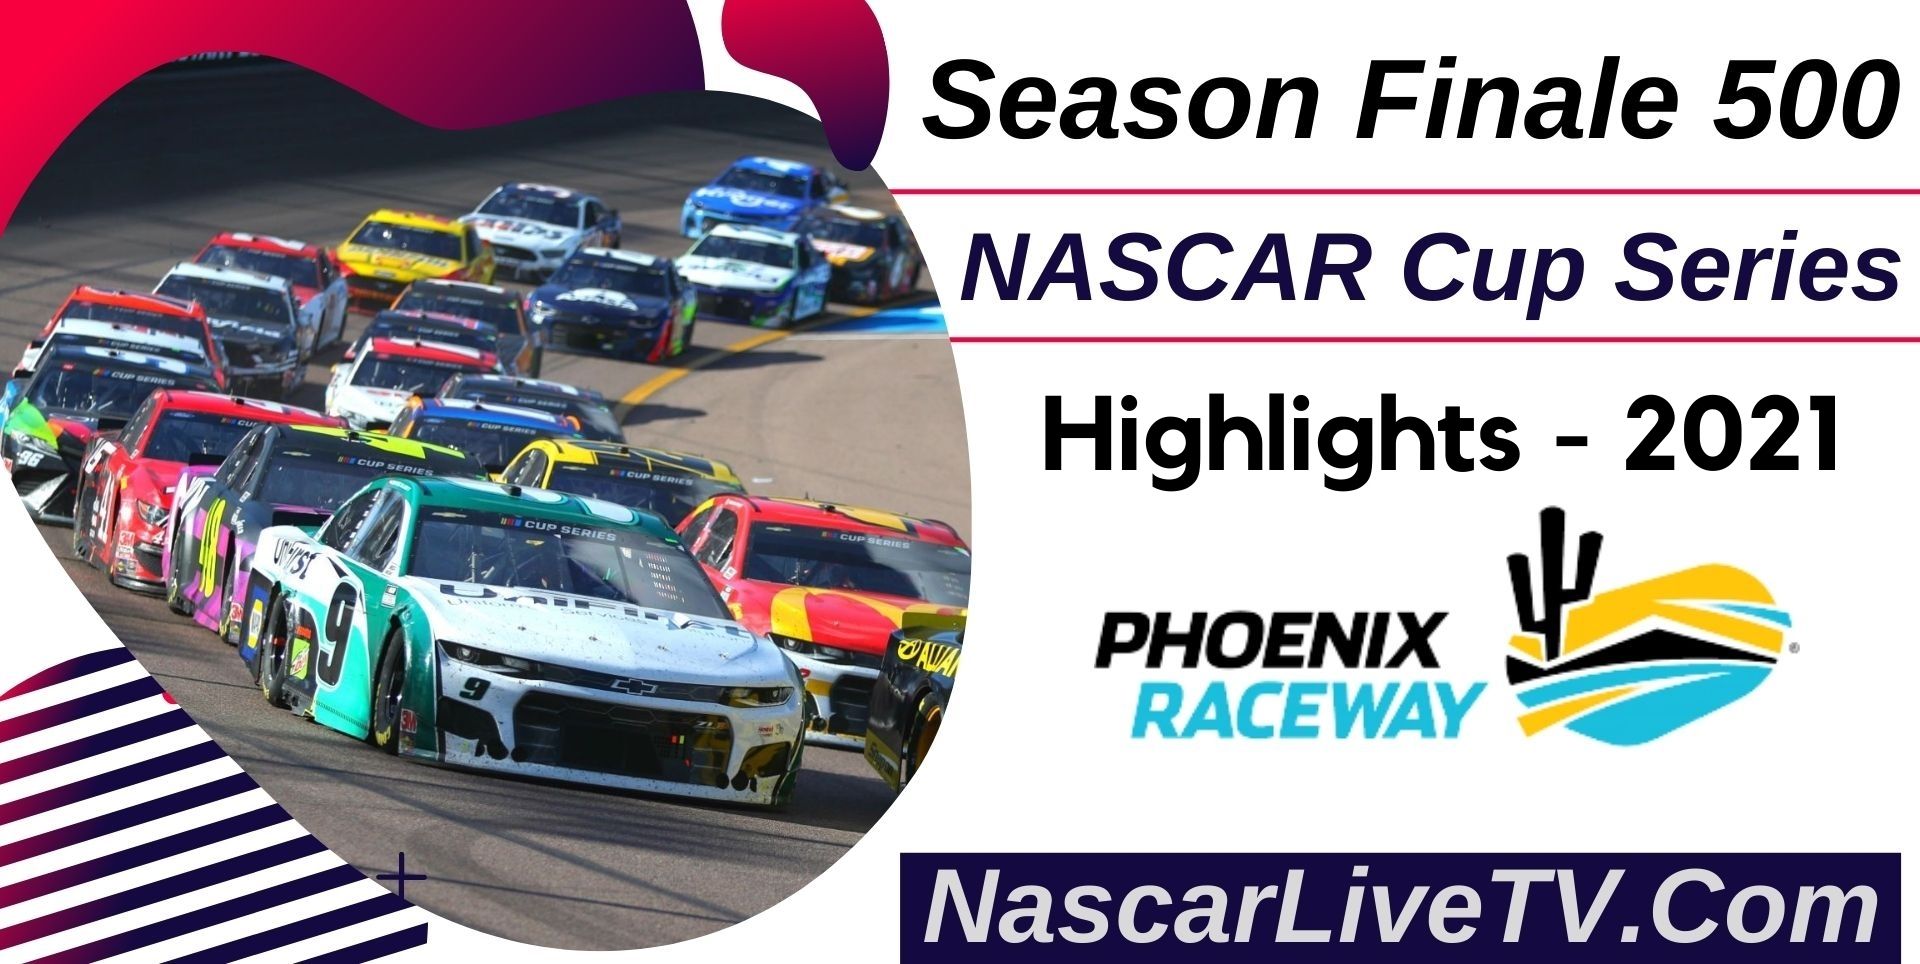 Season Finale 500 Highlights NASCAR Cup Series 2021